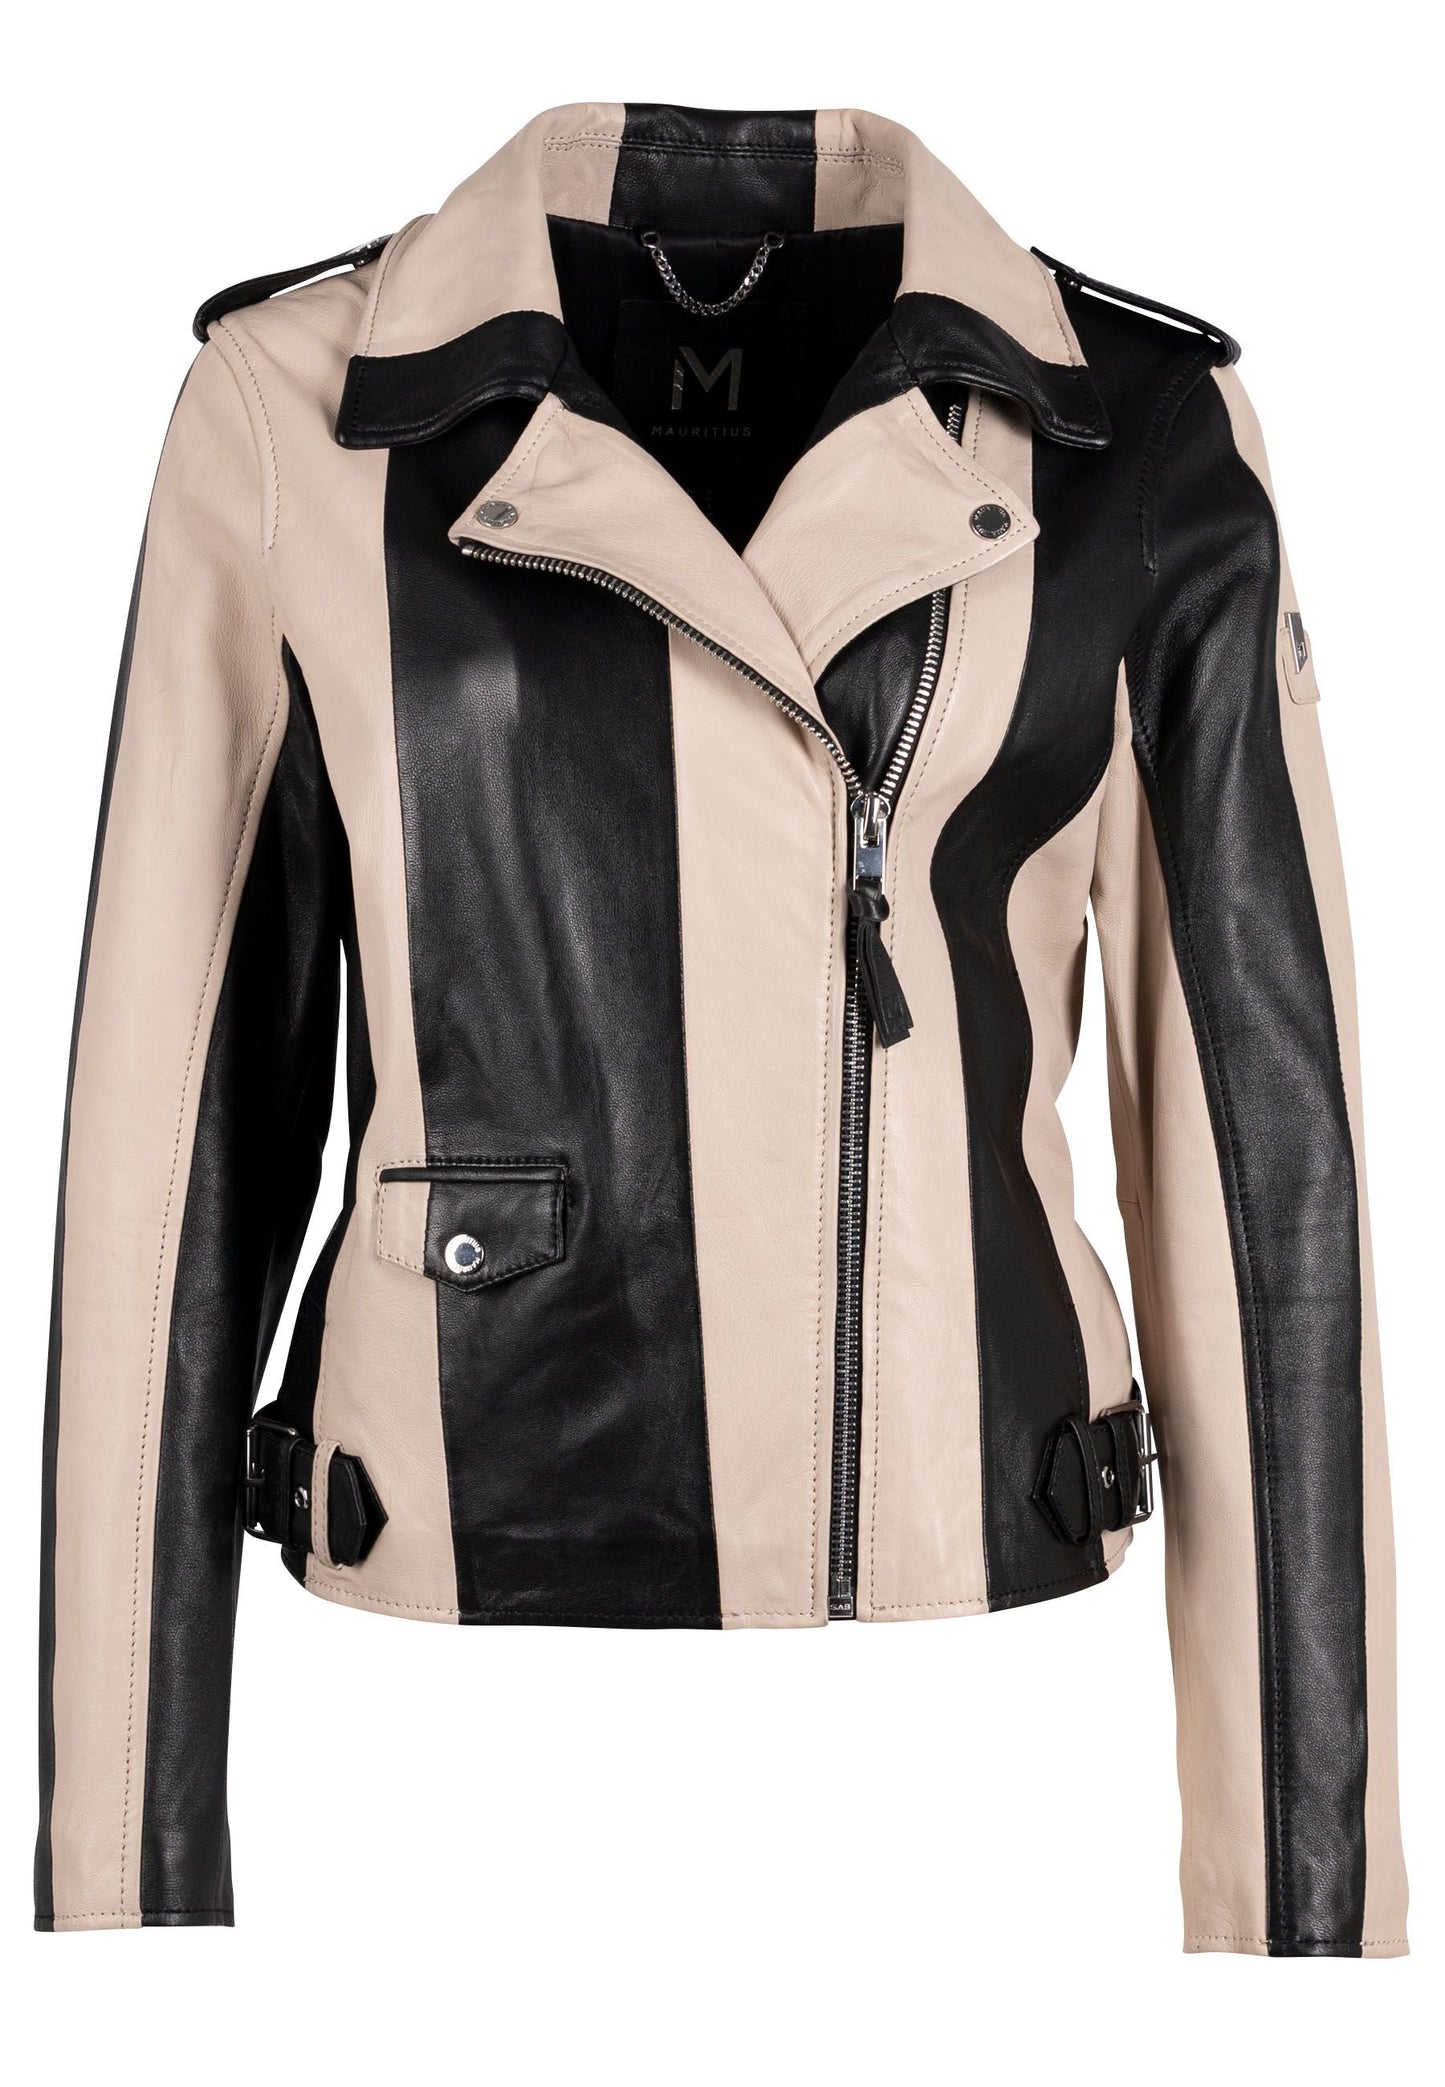 Armilla CF Leather Jacket, Black and Beige